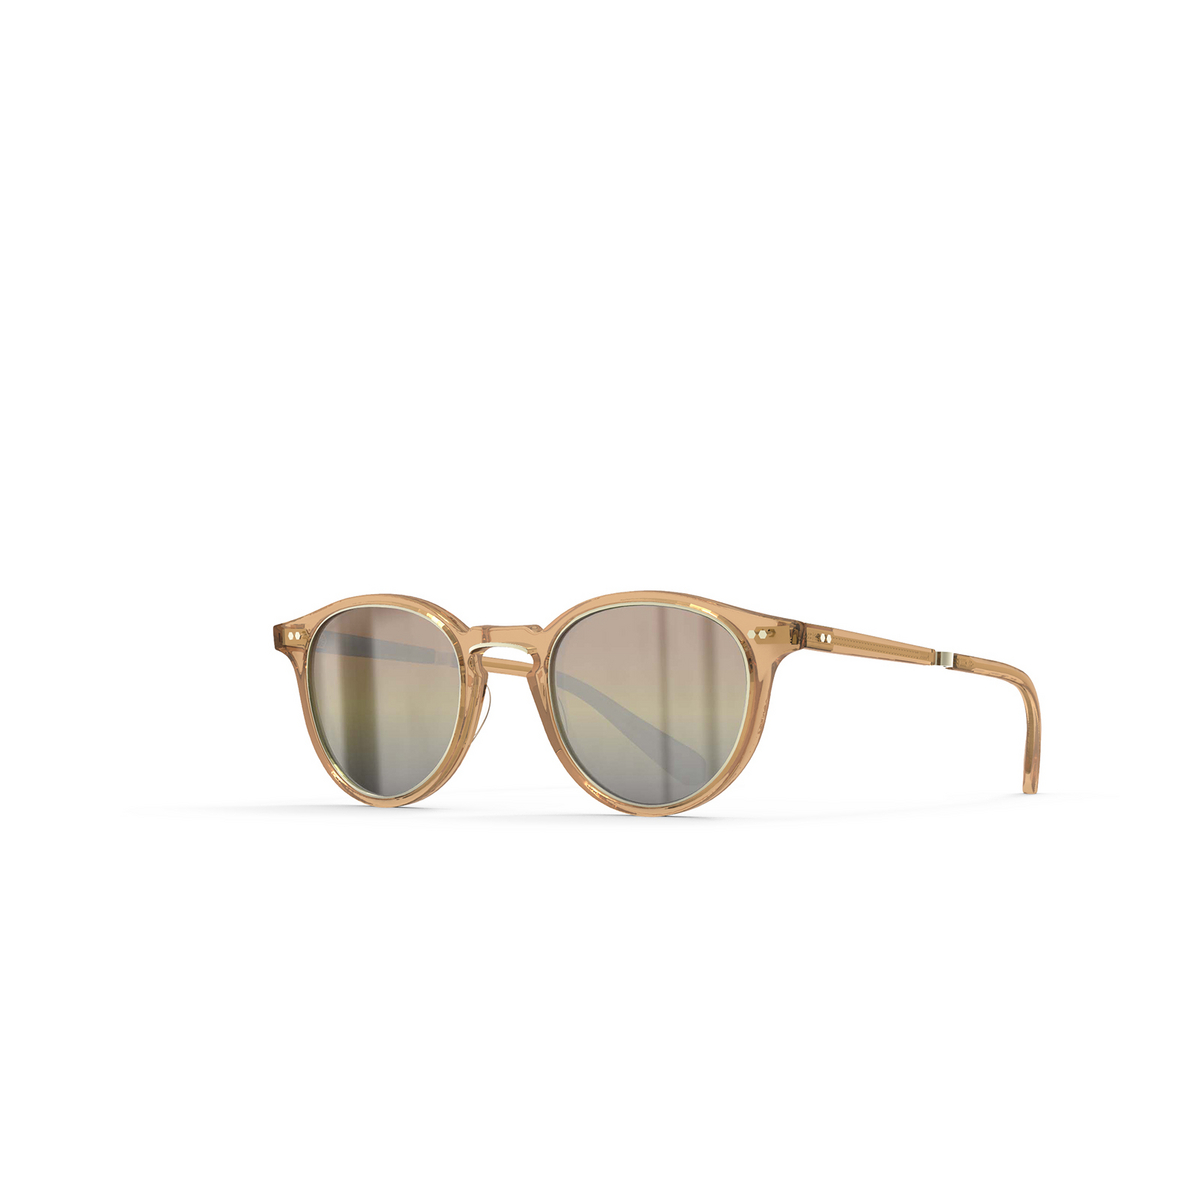 Mr. Leight MARMONT II S Sunglasses TOP-12KG/SMKY Topaz-12K White Gold/Smokey - three-quarters view